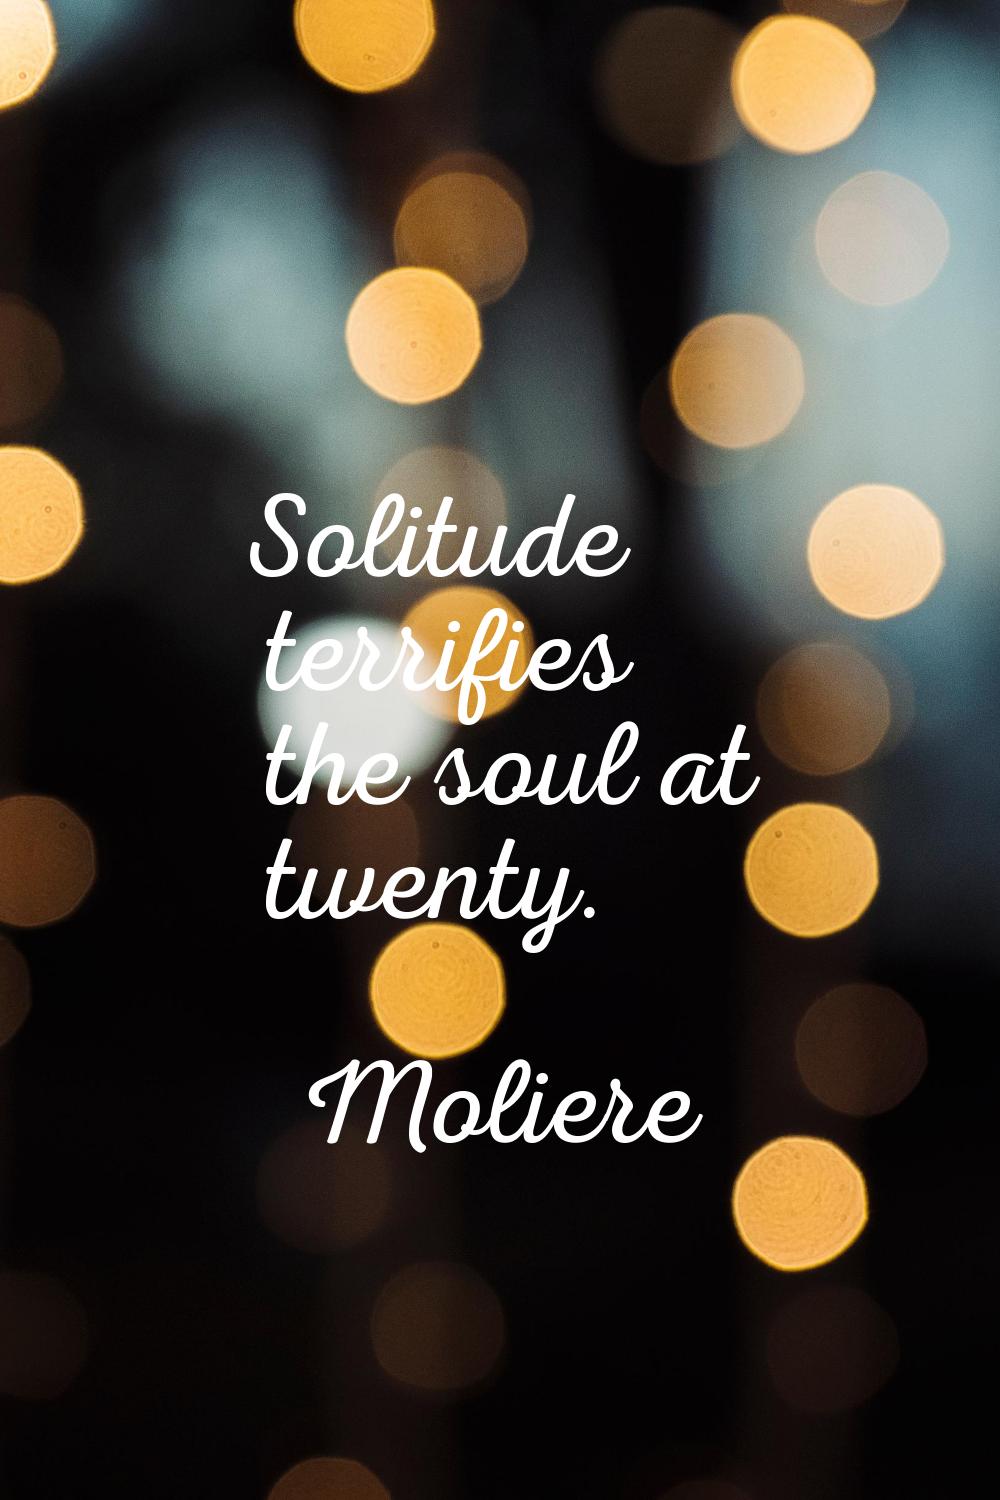 Solitude terrifies the soul at twenty.